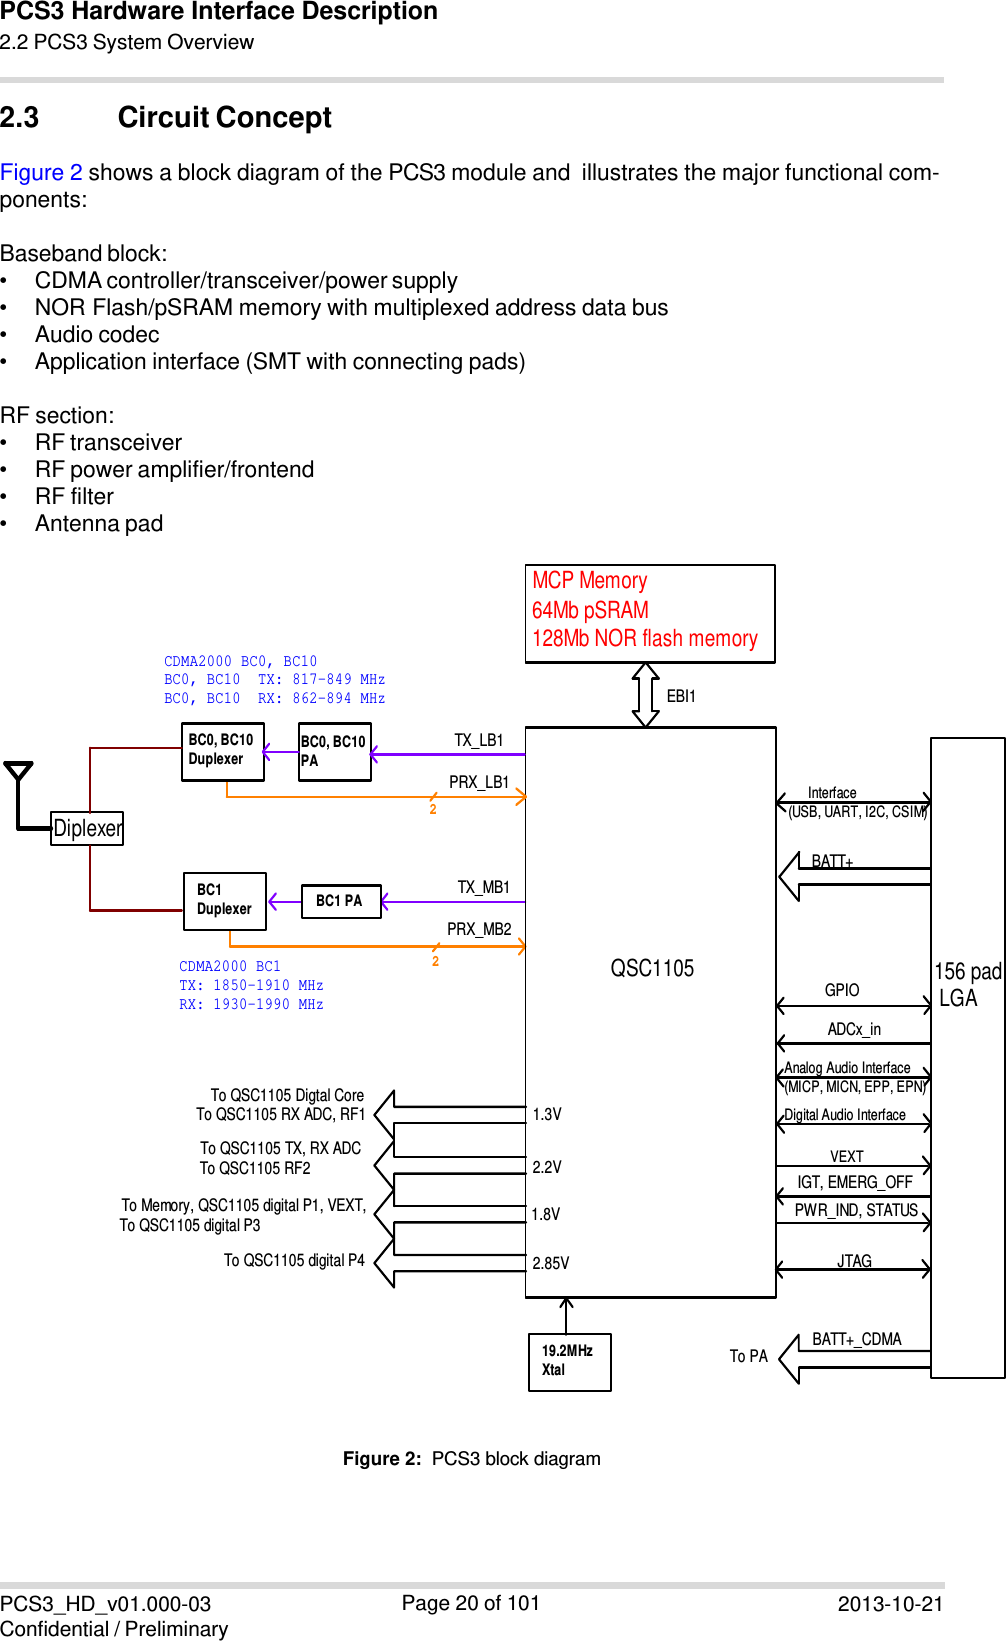 PCS3_HD_v01.000-03 Confidential / Preliminary Page 20 of 101 2013-10-21　PCS3 Hardware Interface Description2.2 PCS3 System Overview   2.3 Circuit Concept Figure 2 shows a block diagram of the PCS3 module and  illustrates the major functional com- ponents: Baseband block: • CDMA controller/transceiver/power supply • NOR Flash/pSRAM memory with multiplexed address data bus • Audio codec • Application interface (SMT with connecting pads) RF section: • RF transceiver • RF power amplifier/frontend • RF filter • Antenna pad    Figure 2:  PCS3 block diagram        Interface (USB, UART, I2C, CSIM)156 pad LGABATT+BATT+_CDMABC1 PAPRX_MB2TX_MB1DiplexerBC1Duplexer64Mb pSRAM 128Mb NOR flash memoryMCP MemoryEBI1QSC1105JTAGBC0, BC10PABC0, BC10DuplexerPRX_LB1TX_LB1GPIOCDMA2000 BC0, BC10BC0, BC10  TX: 817-849 MHzBC0, BC10  RX: 862-894 MHzCDMA2000 BC1TX: 1850-1910 MHzRX: 1930-1990 MHzAnalog Audio Interface(MICP, MICN, EPP, EPN)ADCx_inDigital Audio InterfaceVEXTIGT, EMERG_OFFPWR_IND, STATUSTo PATo QSC1105 Digtal CoreTo QSC1105 RX ADC, RF1To Memory, QSC1105 digital P1, VEXT,To QSC1105 digital P419.2MHzXtal2.85V1.8V2.2V1.3VTo QSC1105 RF2To QSC1105 TX, RX ADCTo QSC1105 digital P322